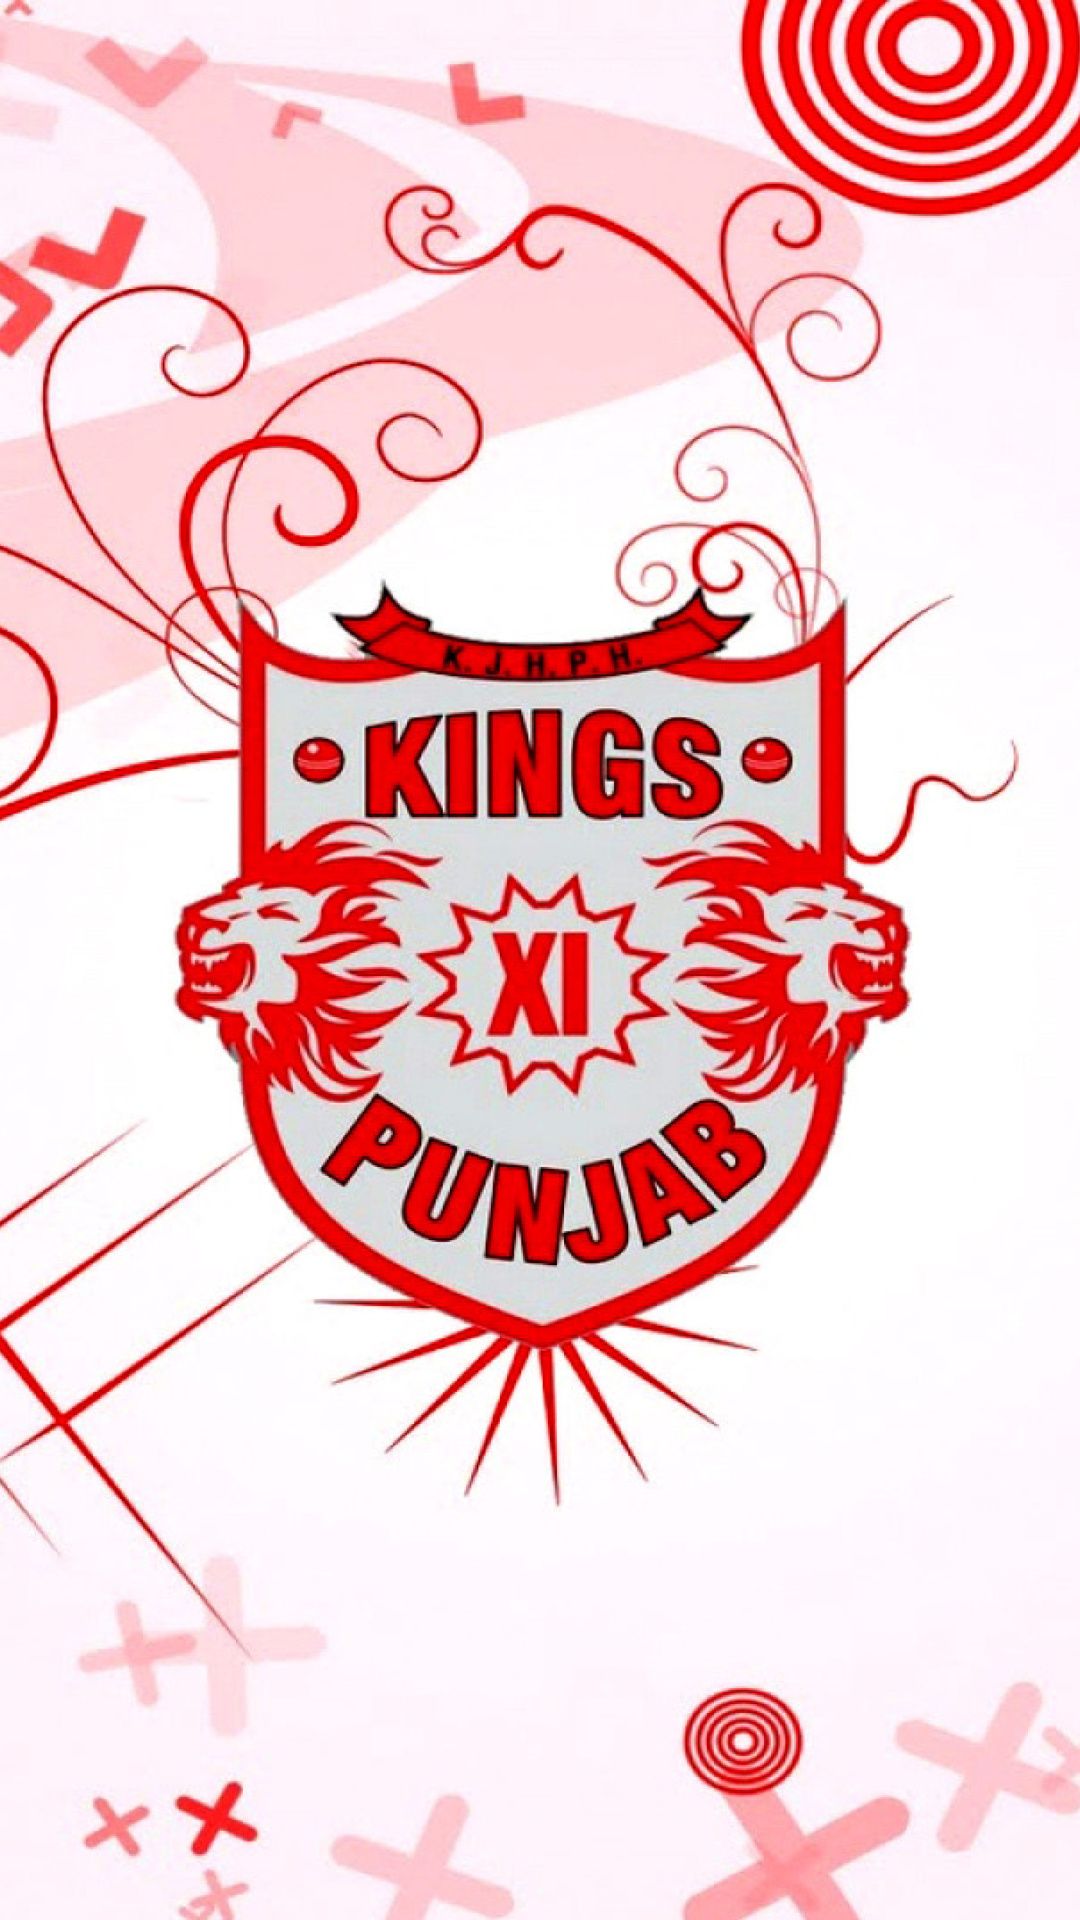 Kings Xi Punjab Wallpaper for iPhone 6 Plus